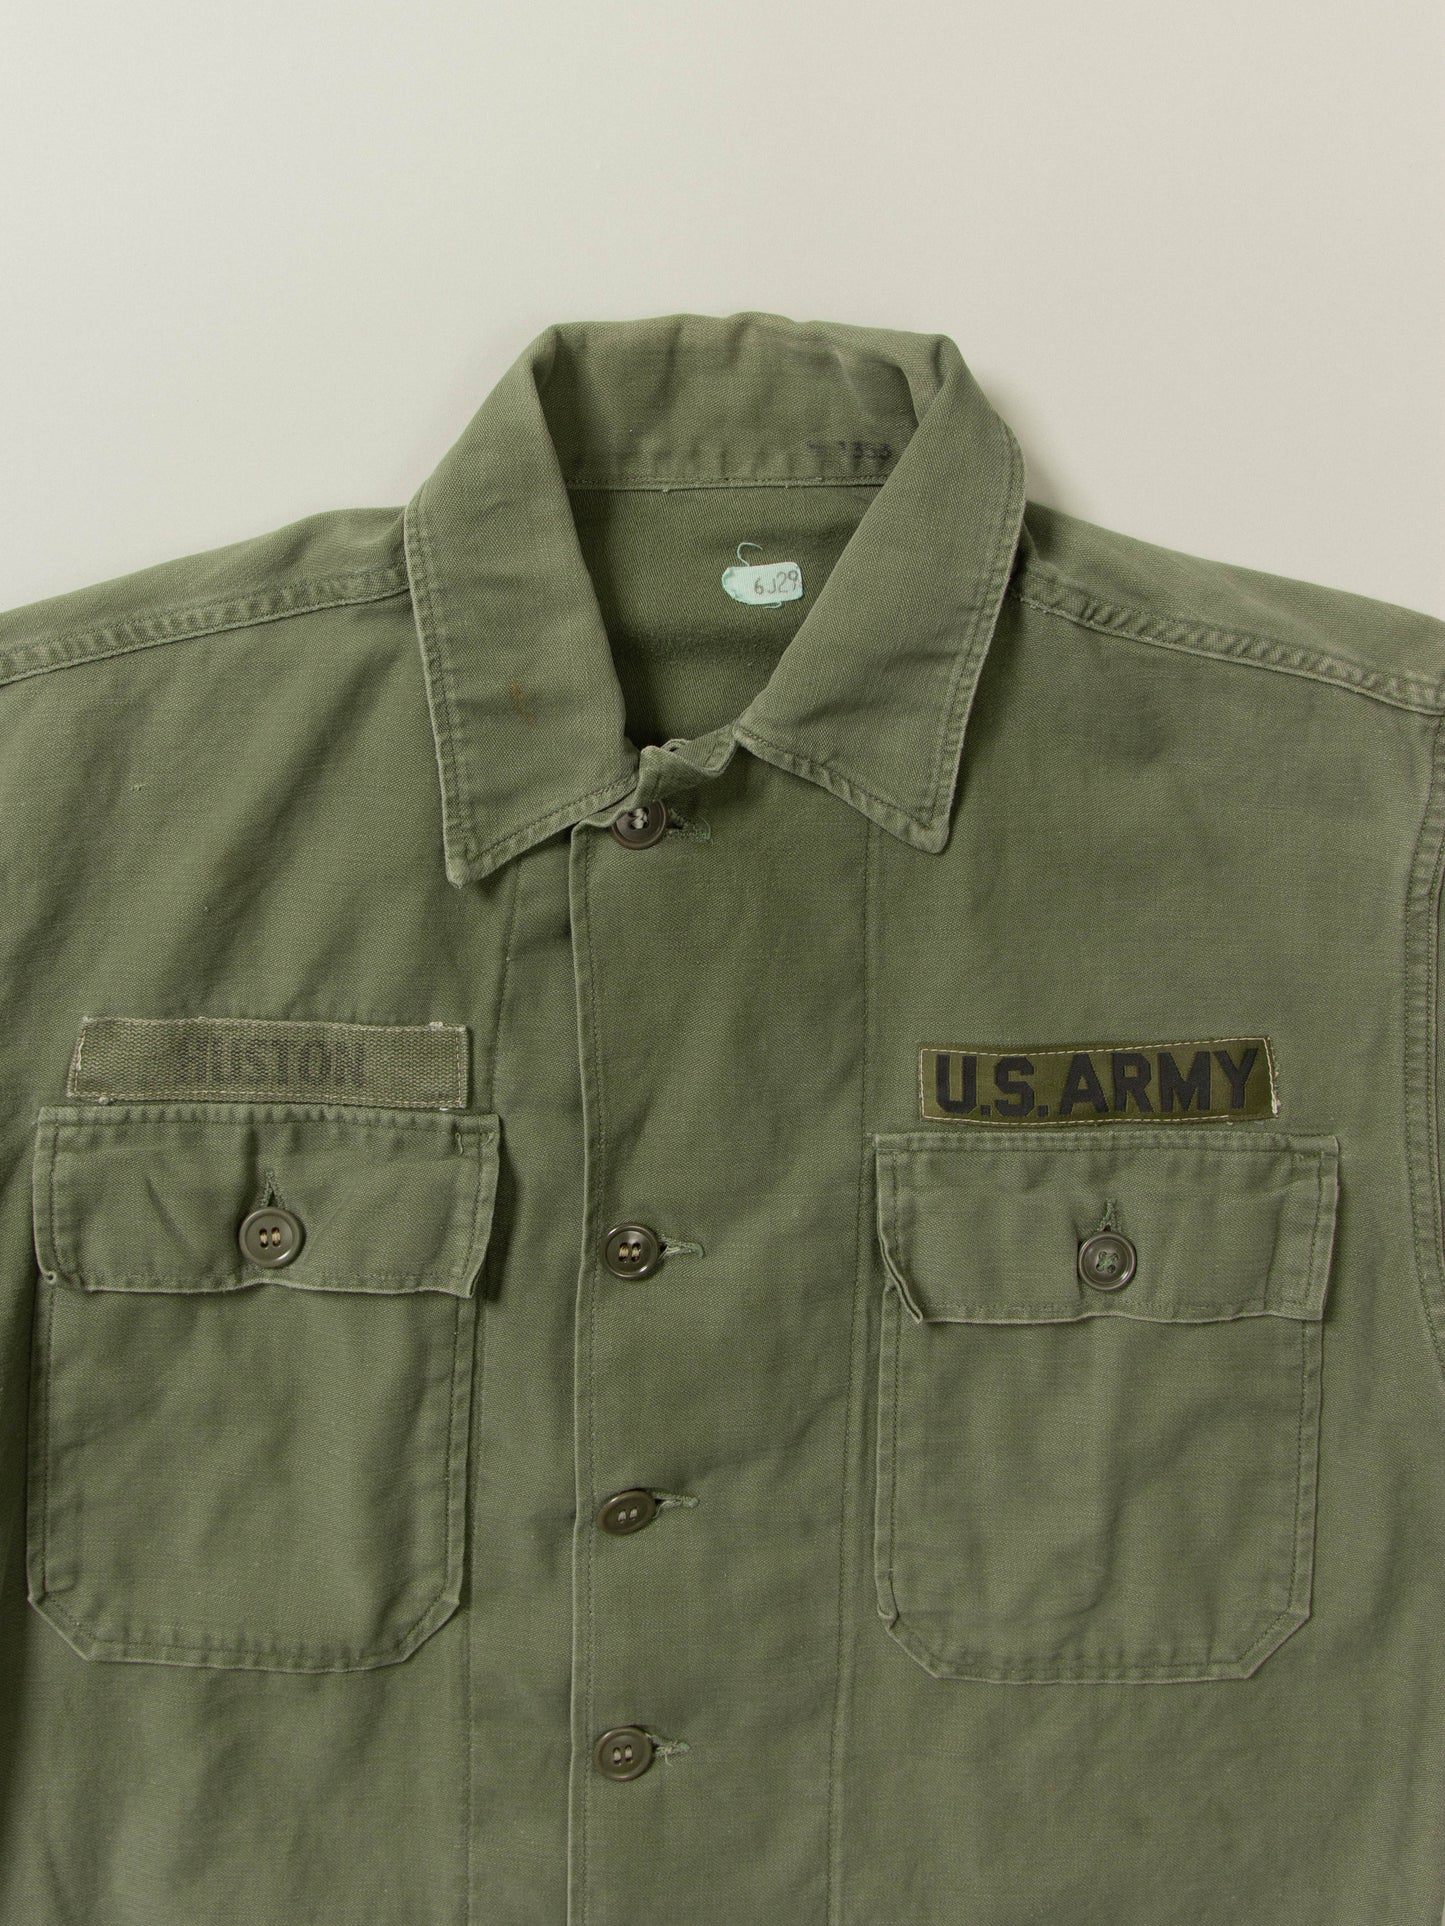 Vtg 1960s US Army OG-107 Fatigue Shirt (S)